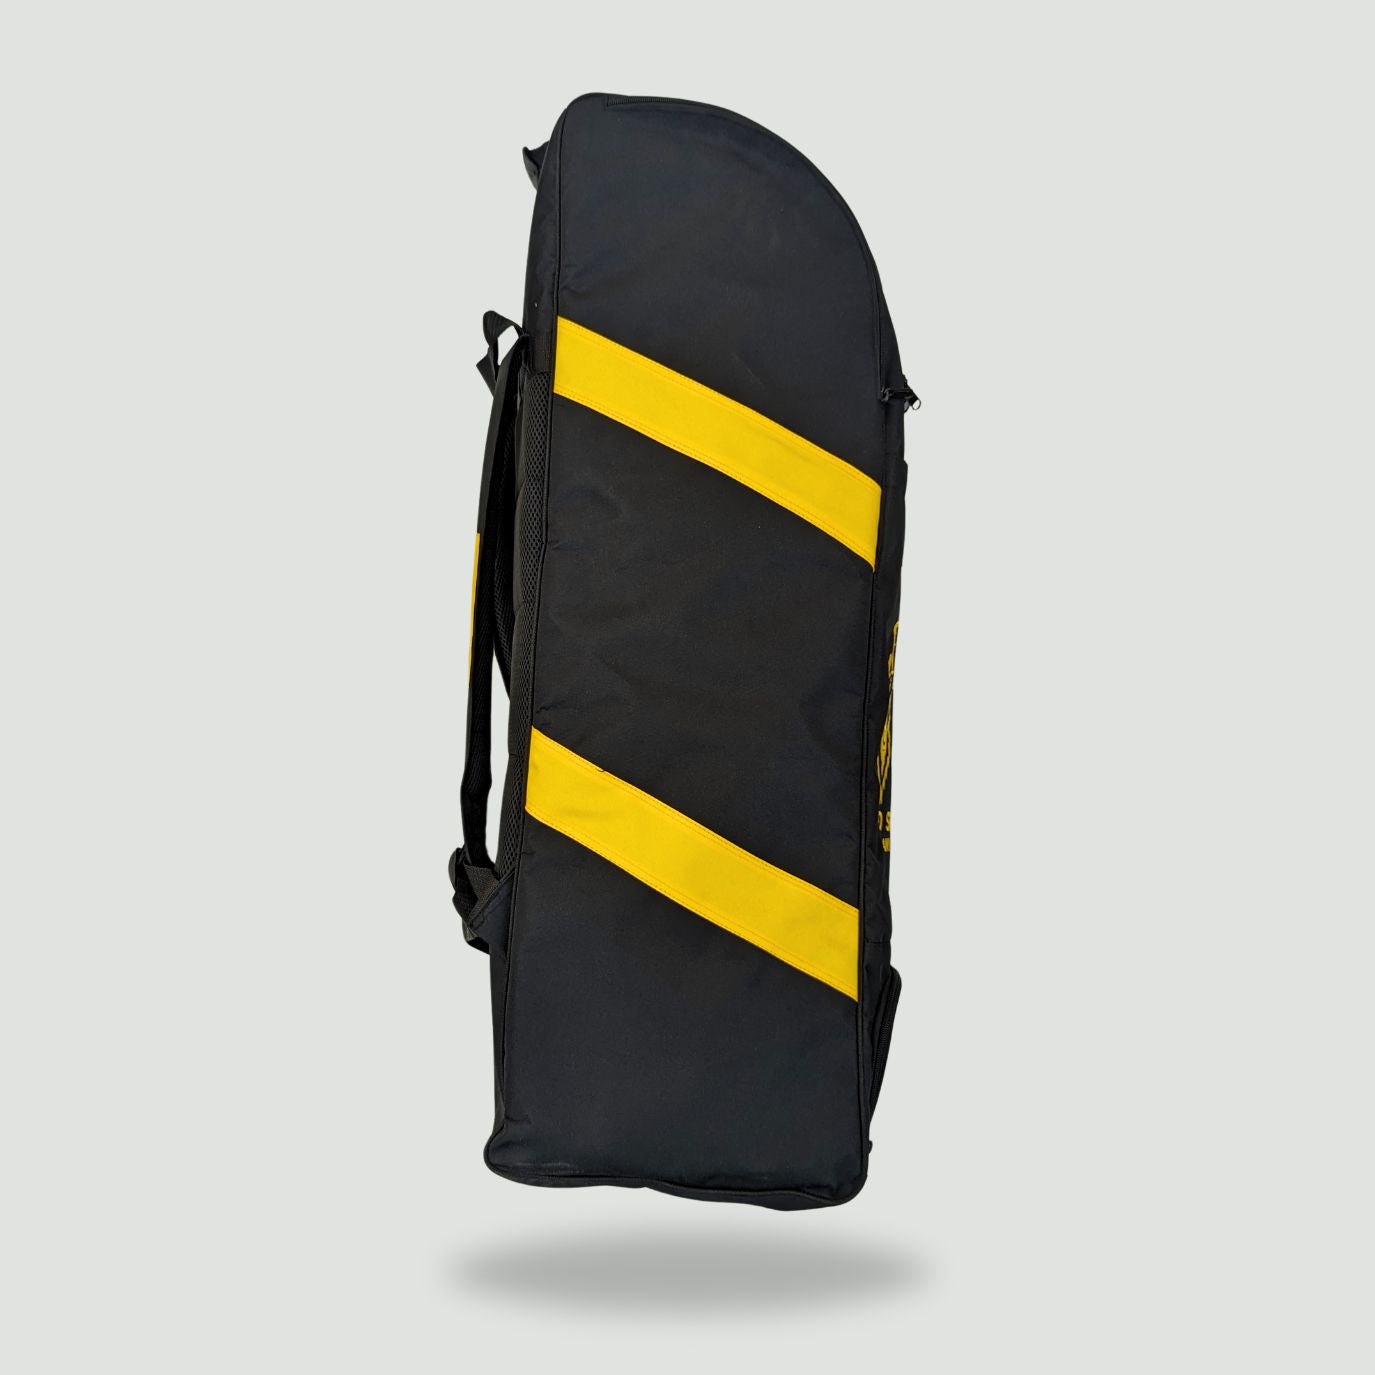 Buy Cricket Kit bag | Tornado Sports Company in the USA | cricket kit bags  store